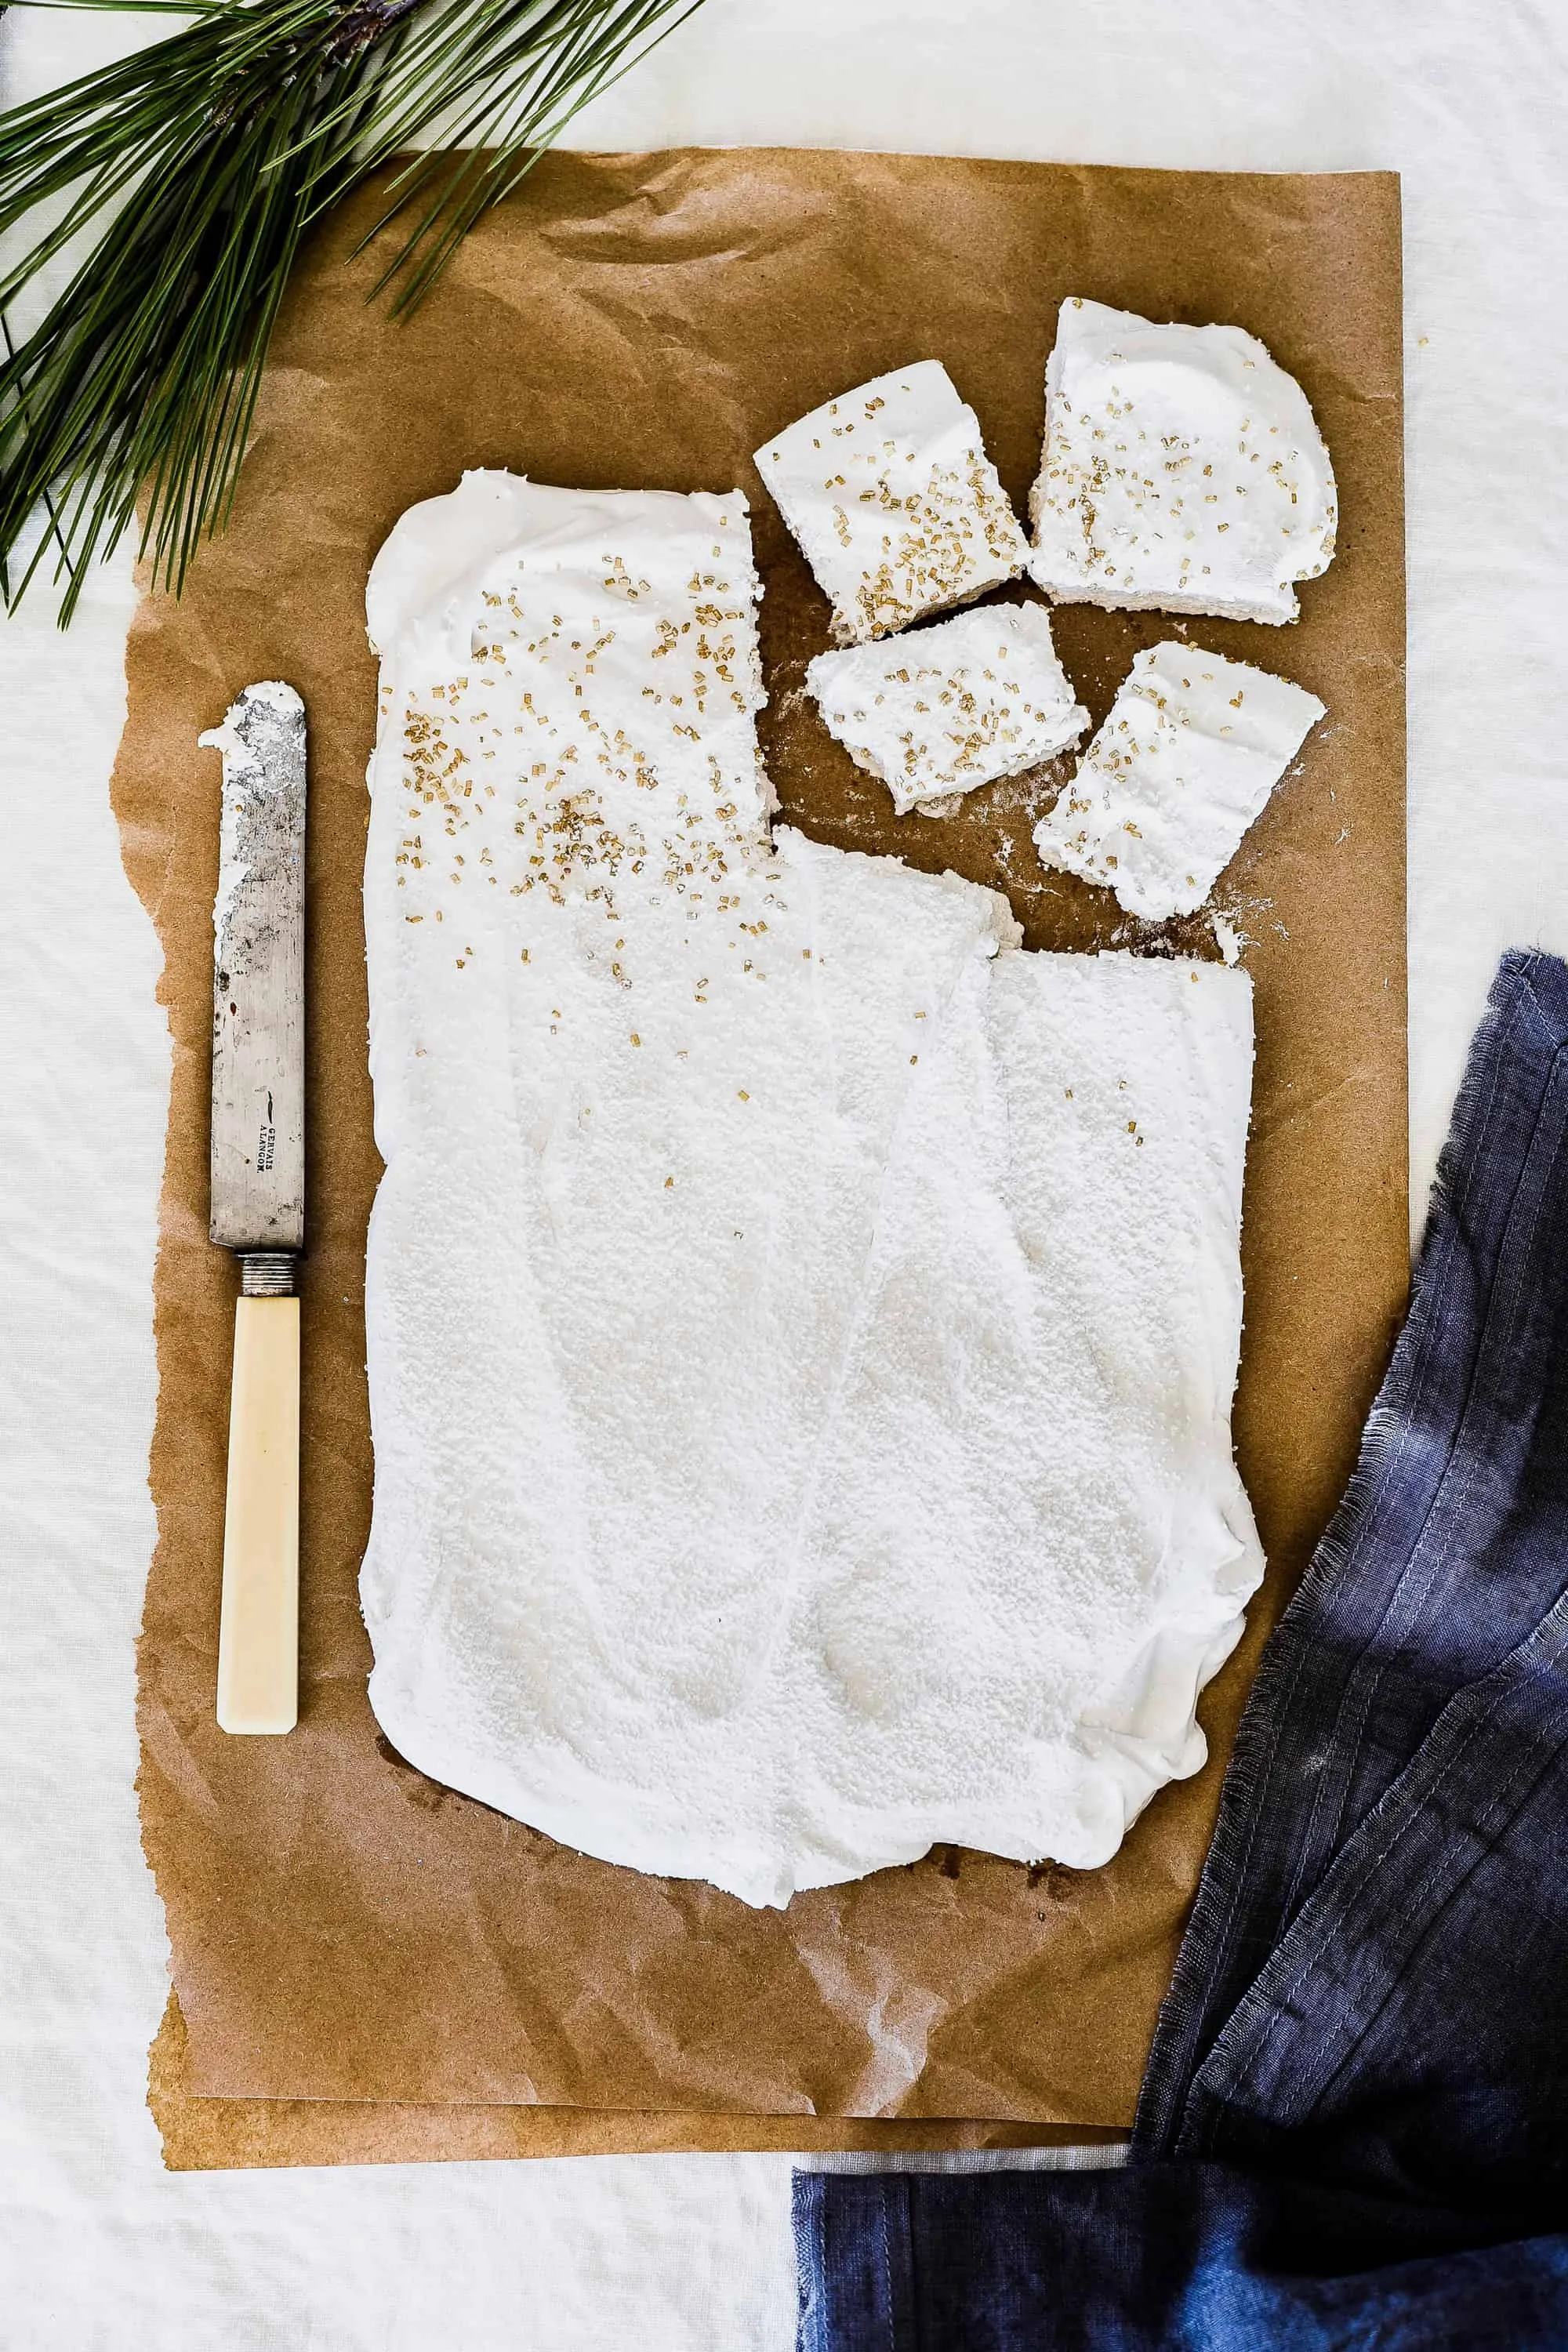 Best Christmas Desserts: Homemade Marshmallows